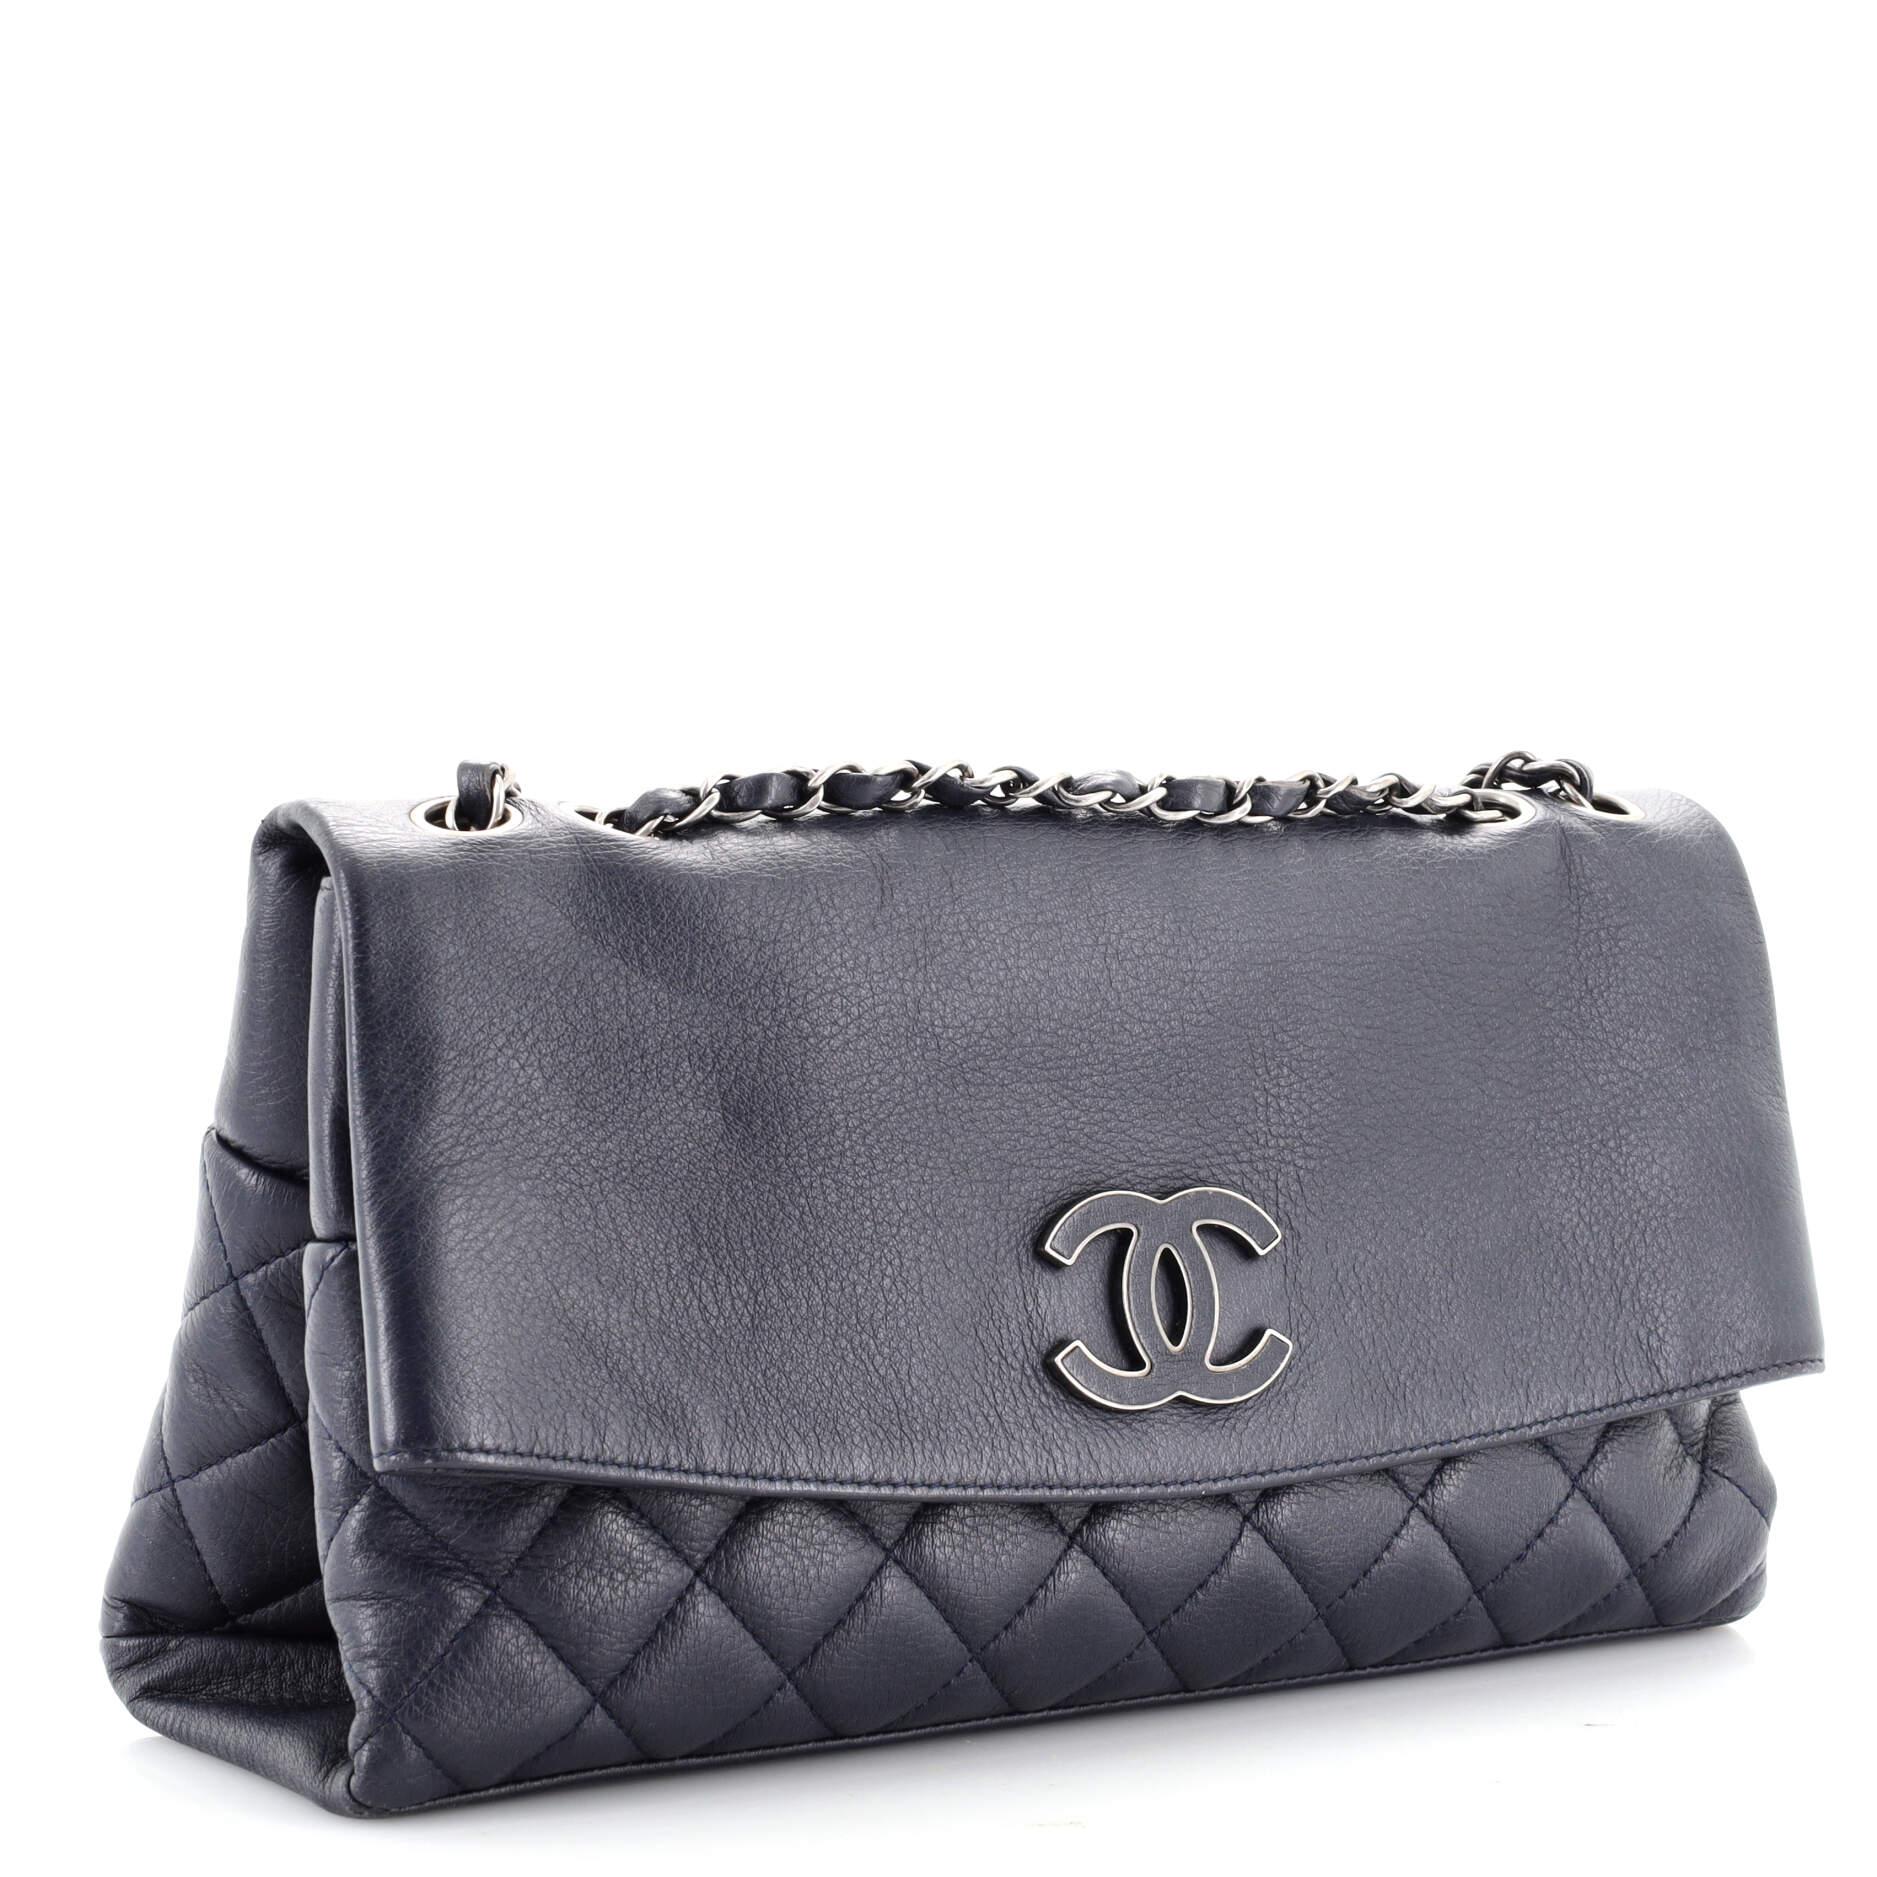 Black Chanel Hamptons Foldover Flap Bag Quilted Calfskin Medium